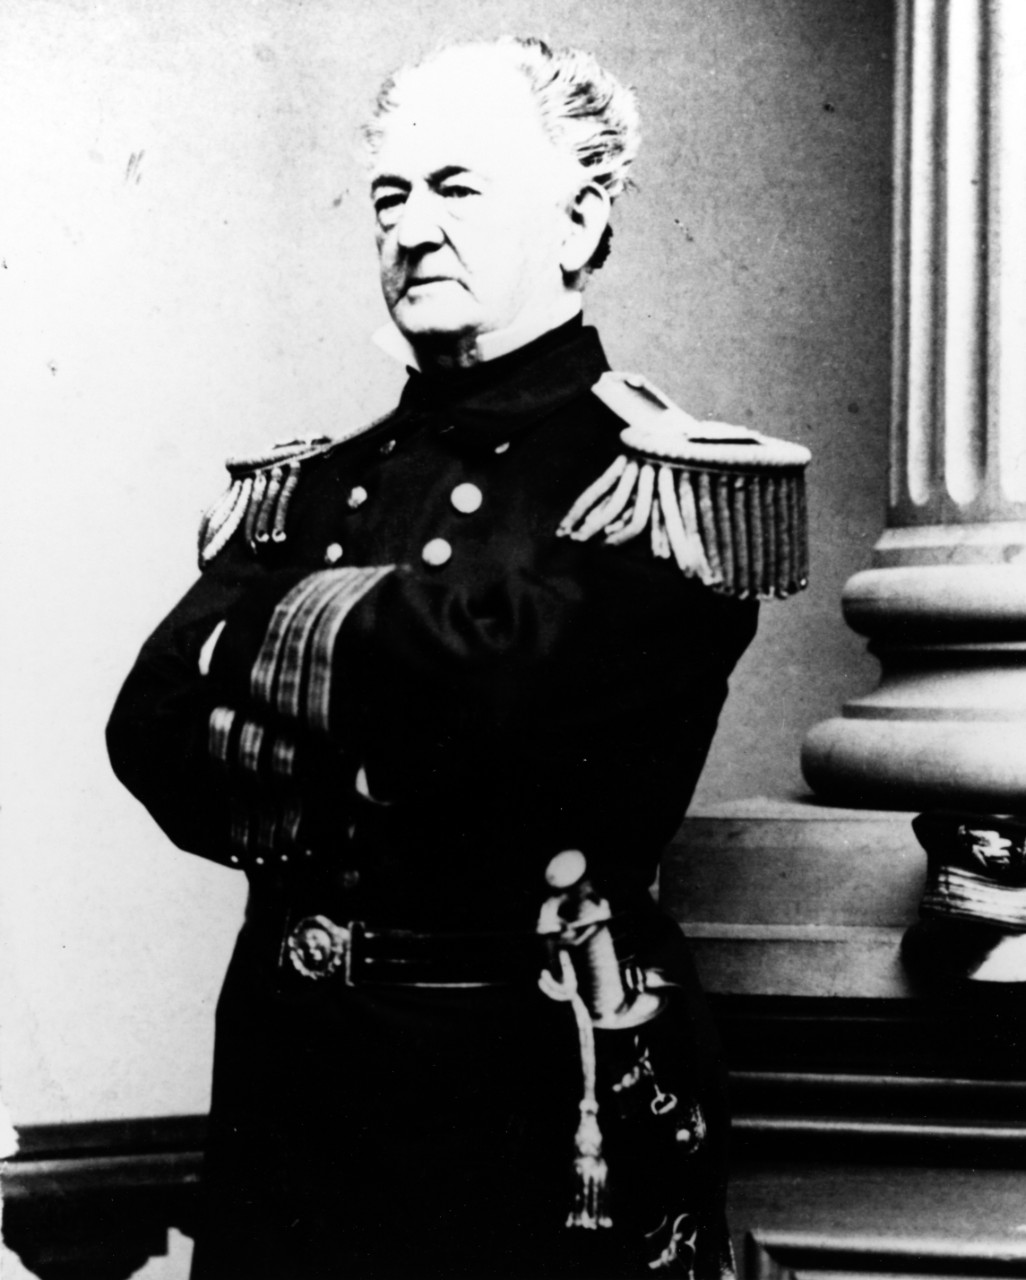 Captain William L. Hudson, USN